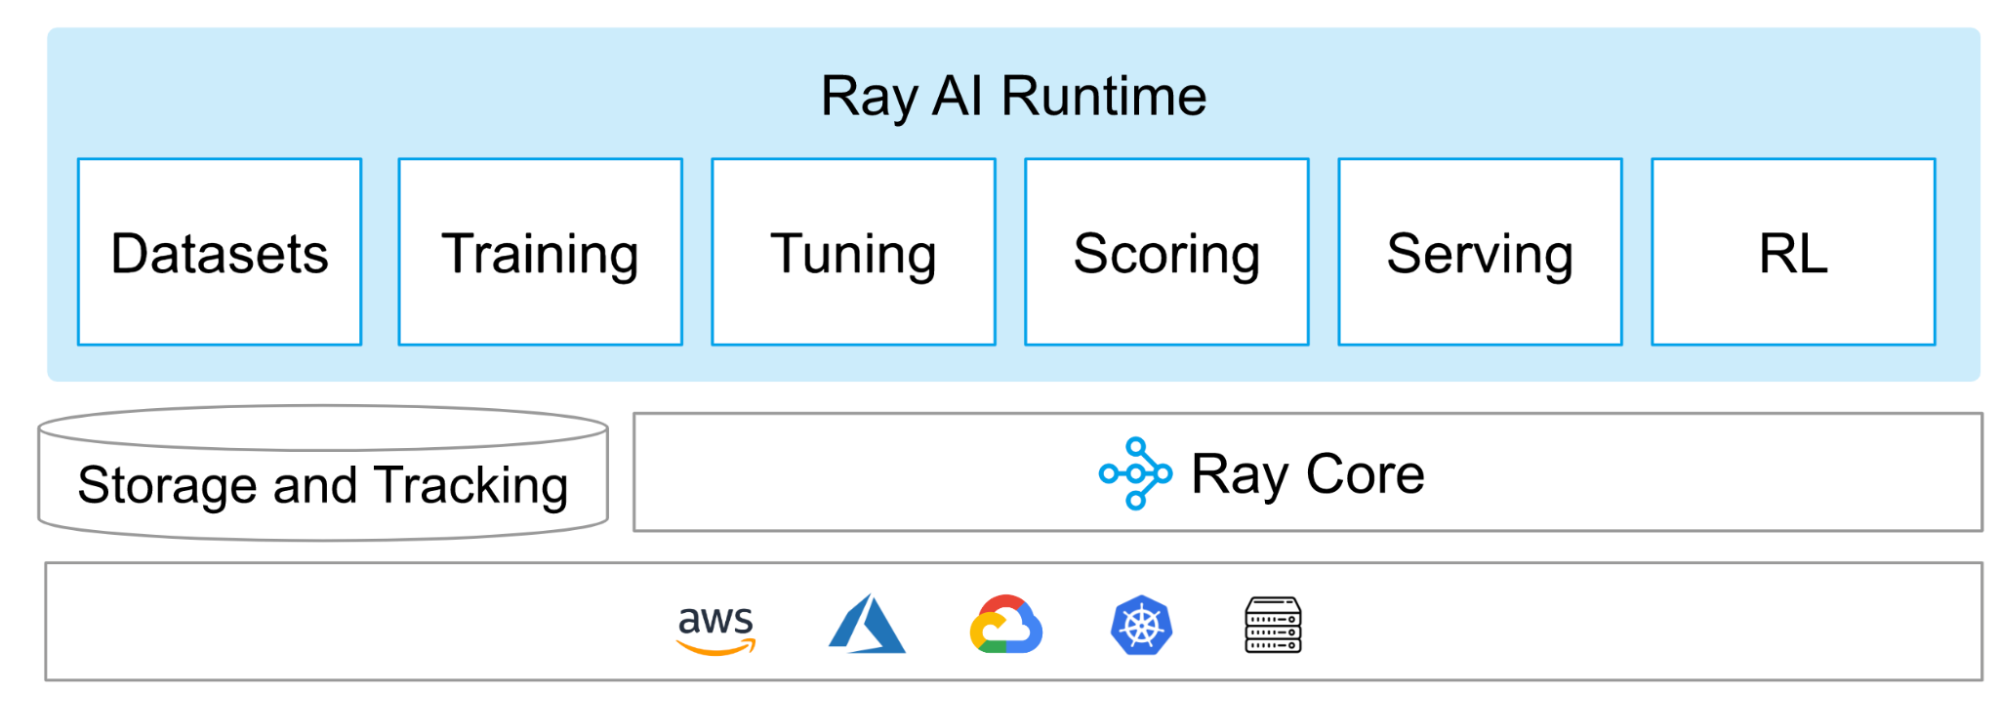 Ray AI Runtime diagram